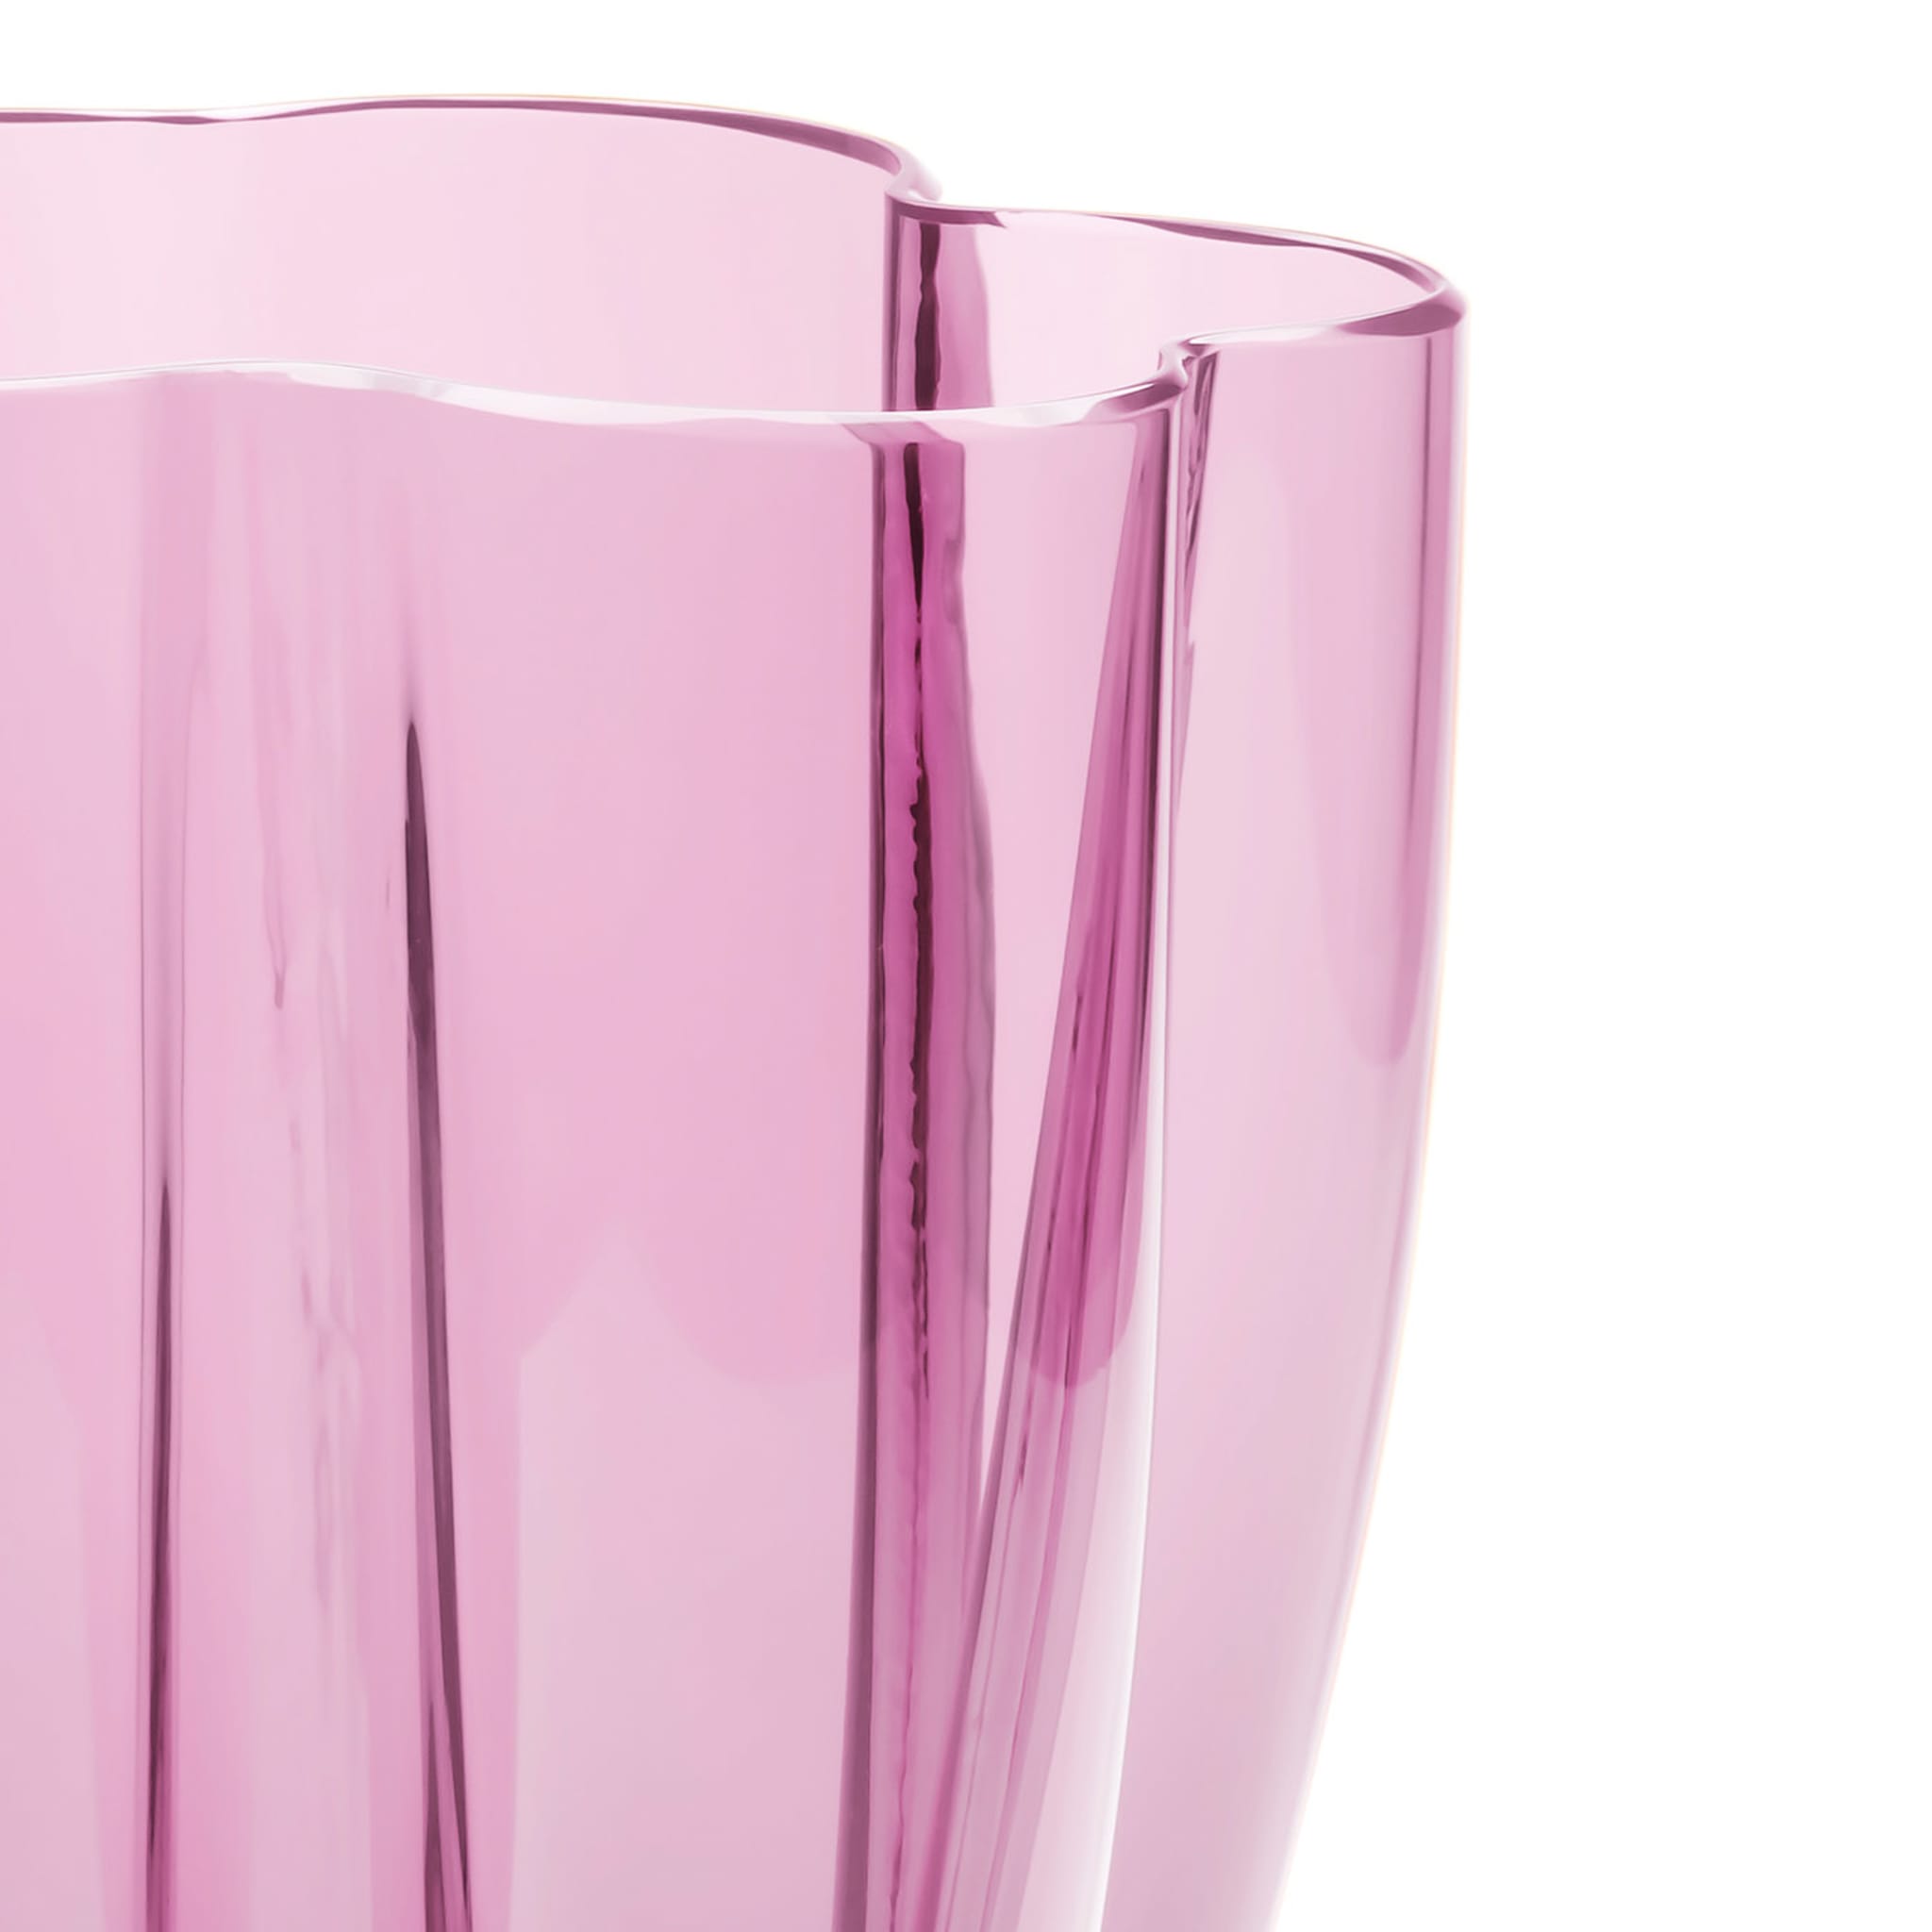 Petalo Amethyst Pink Small Vase - Alternative view 1